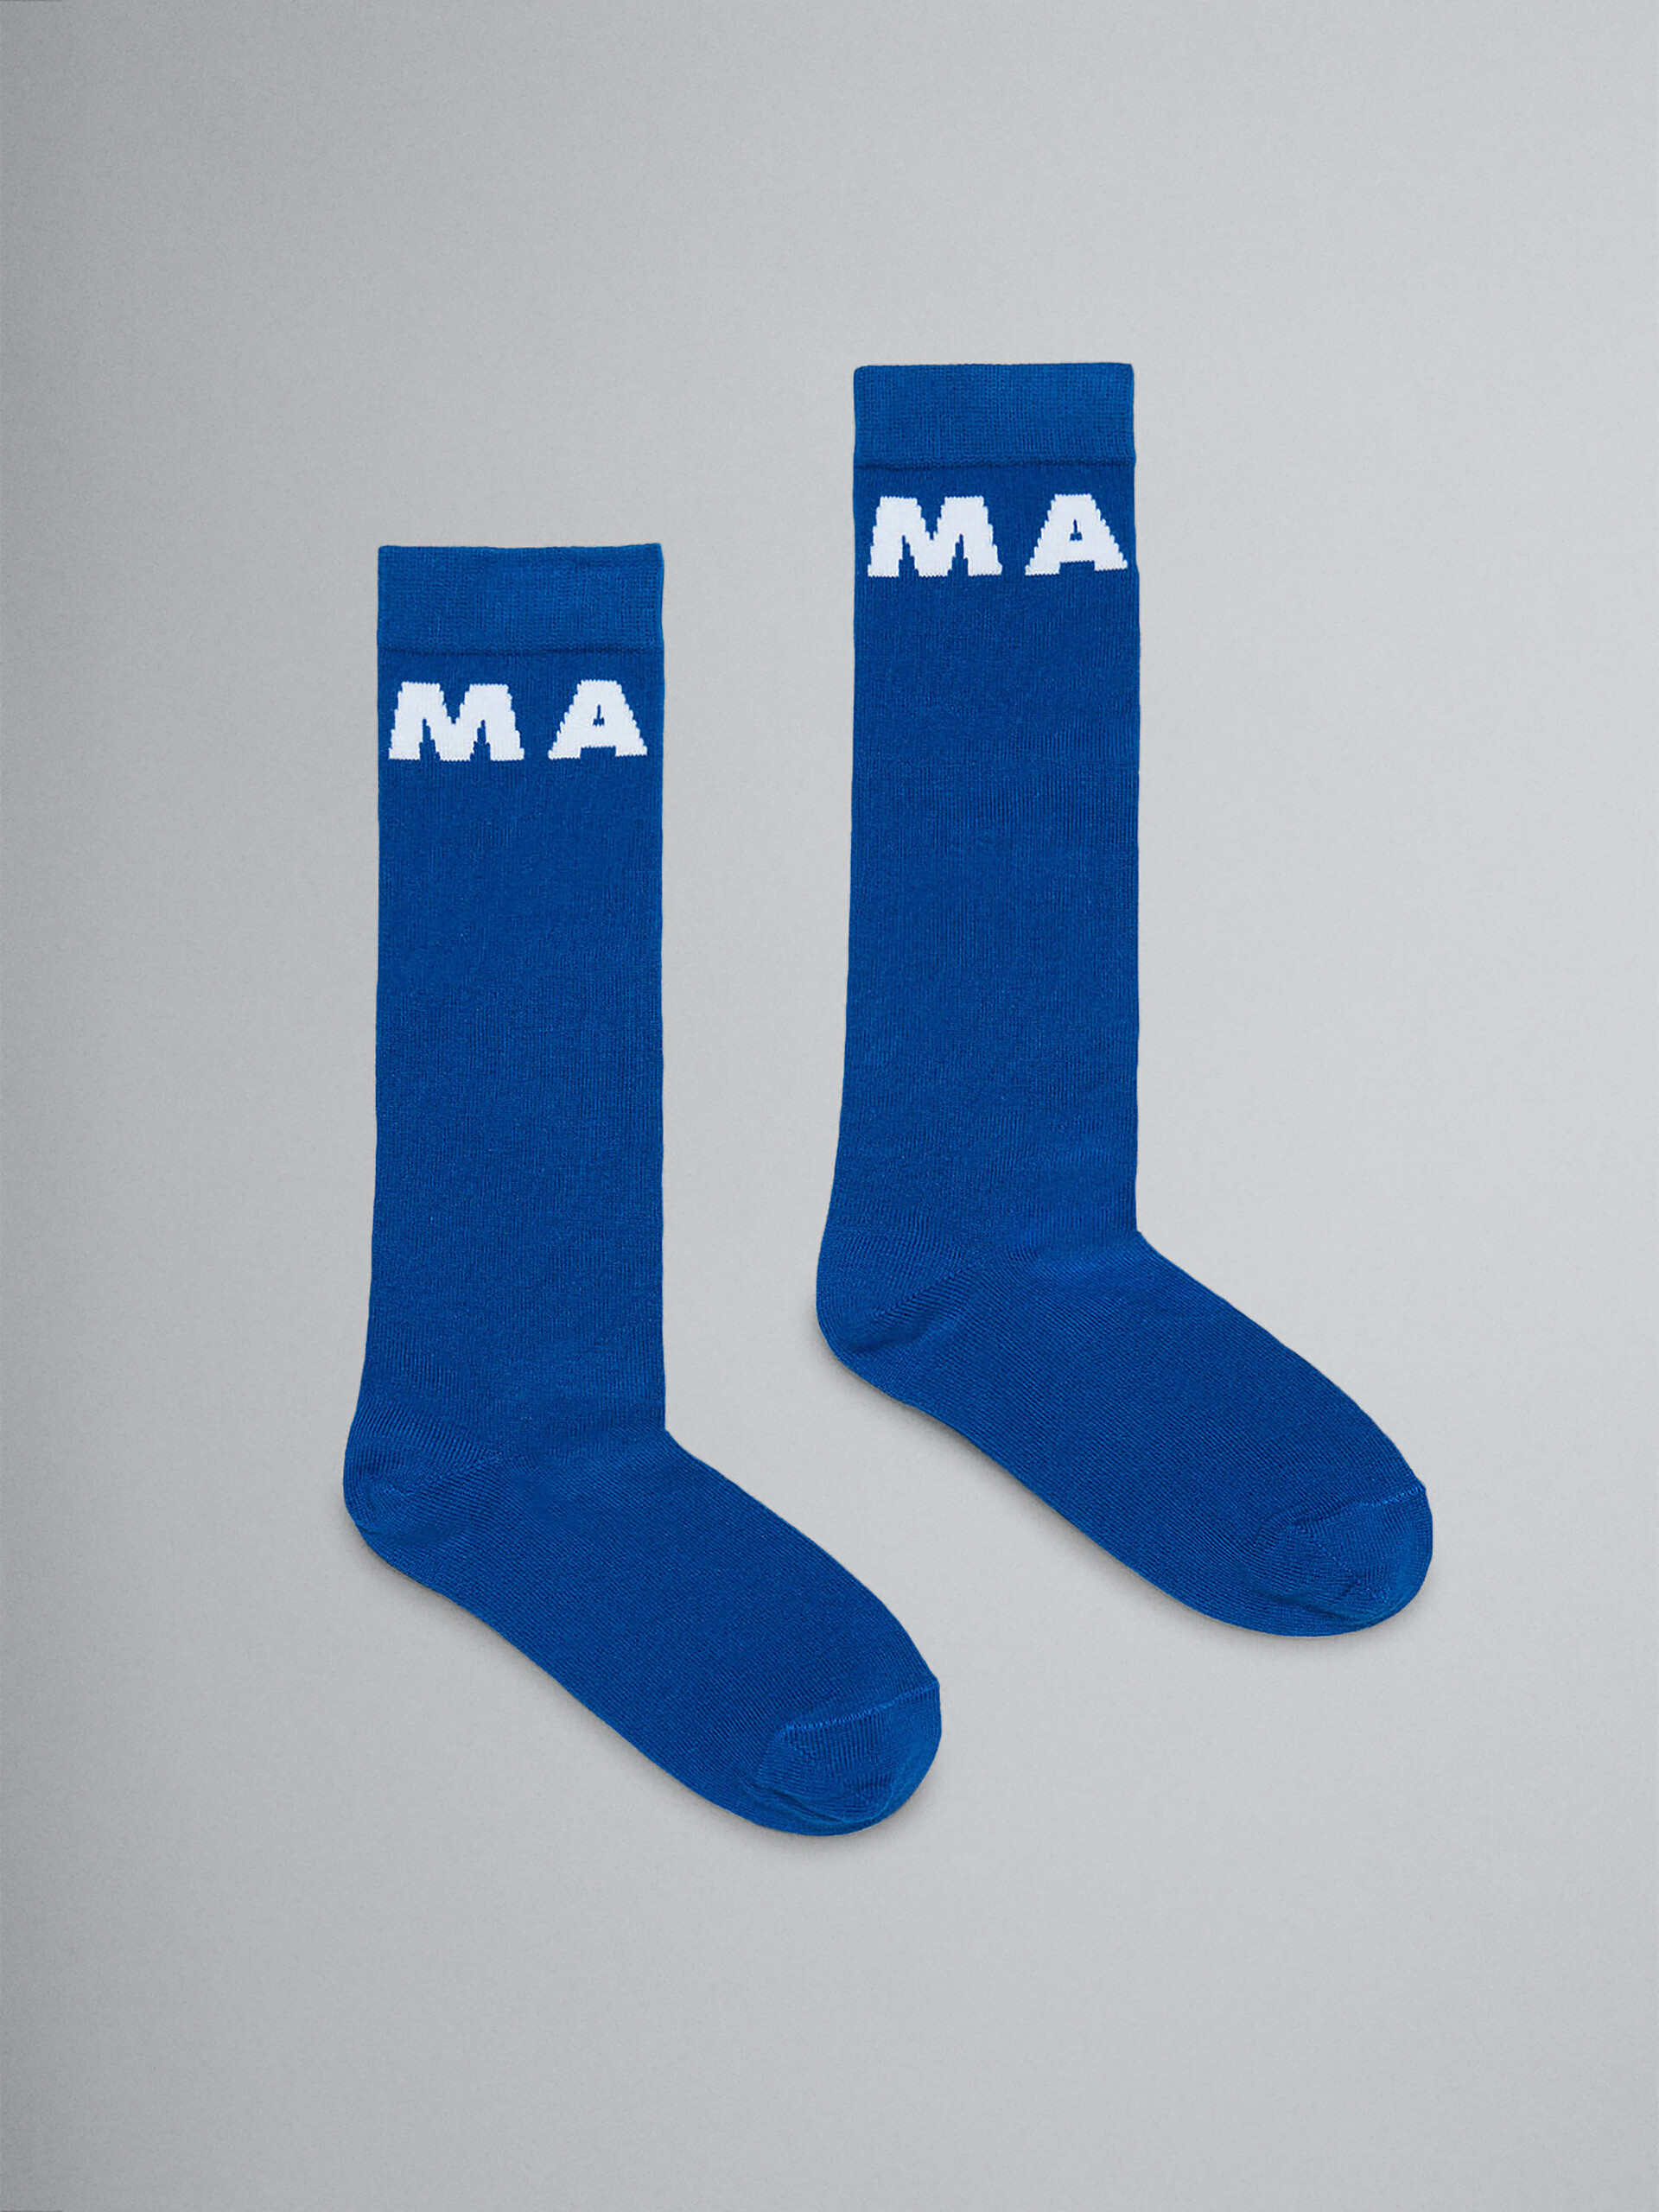 Blue long socks with logo - Socks - Image 1